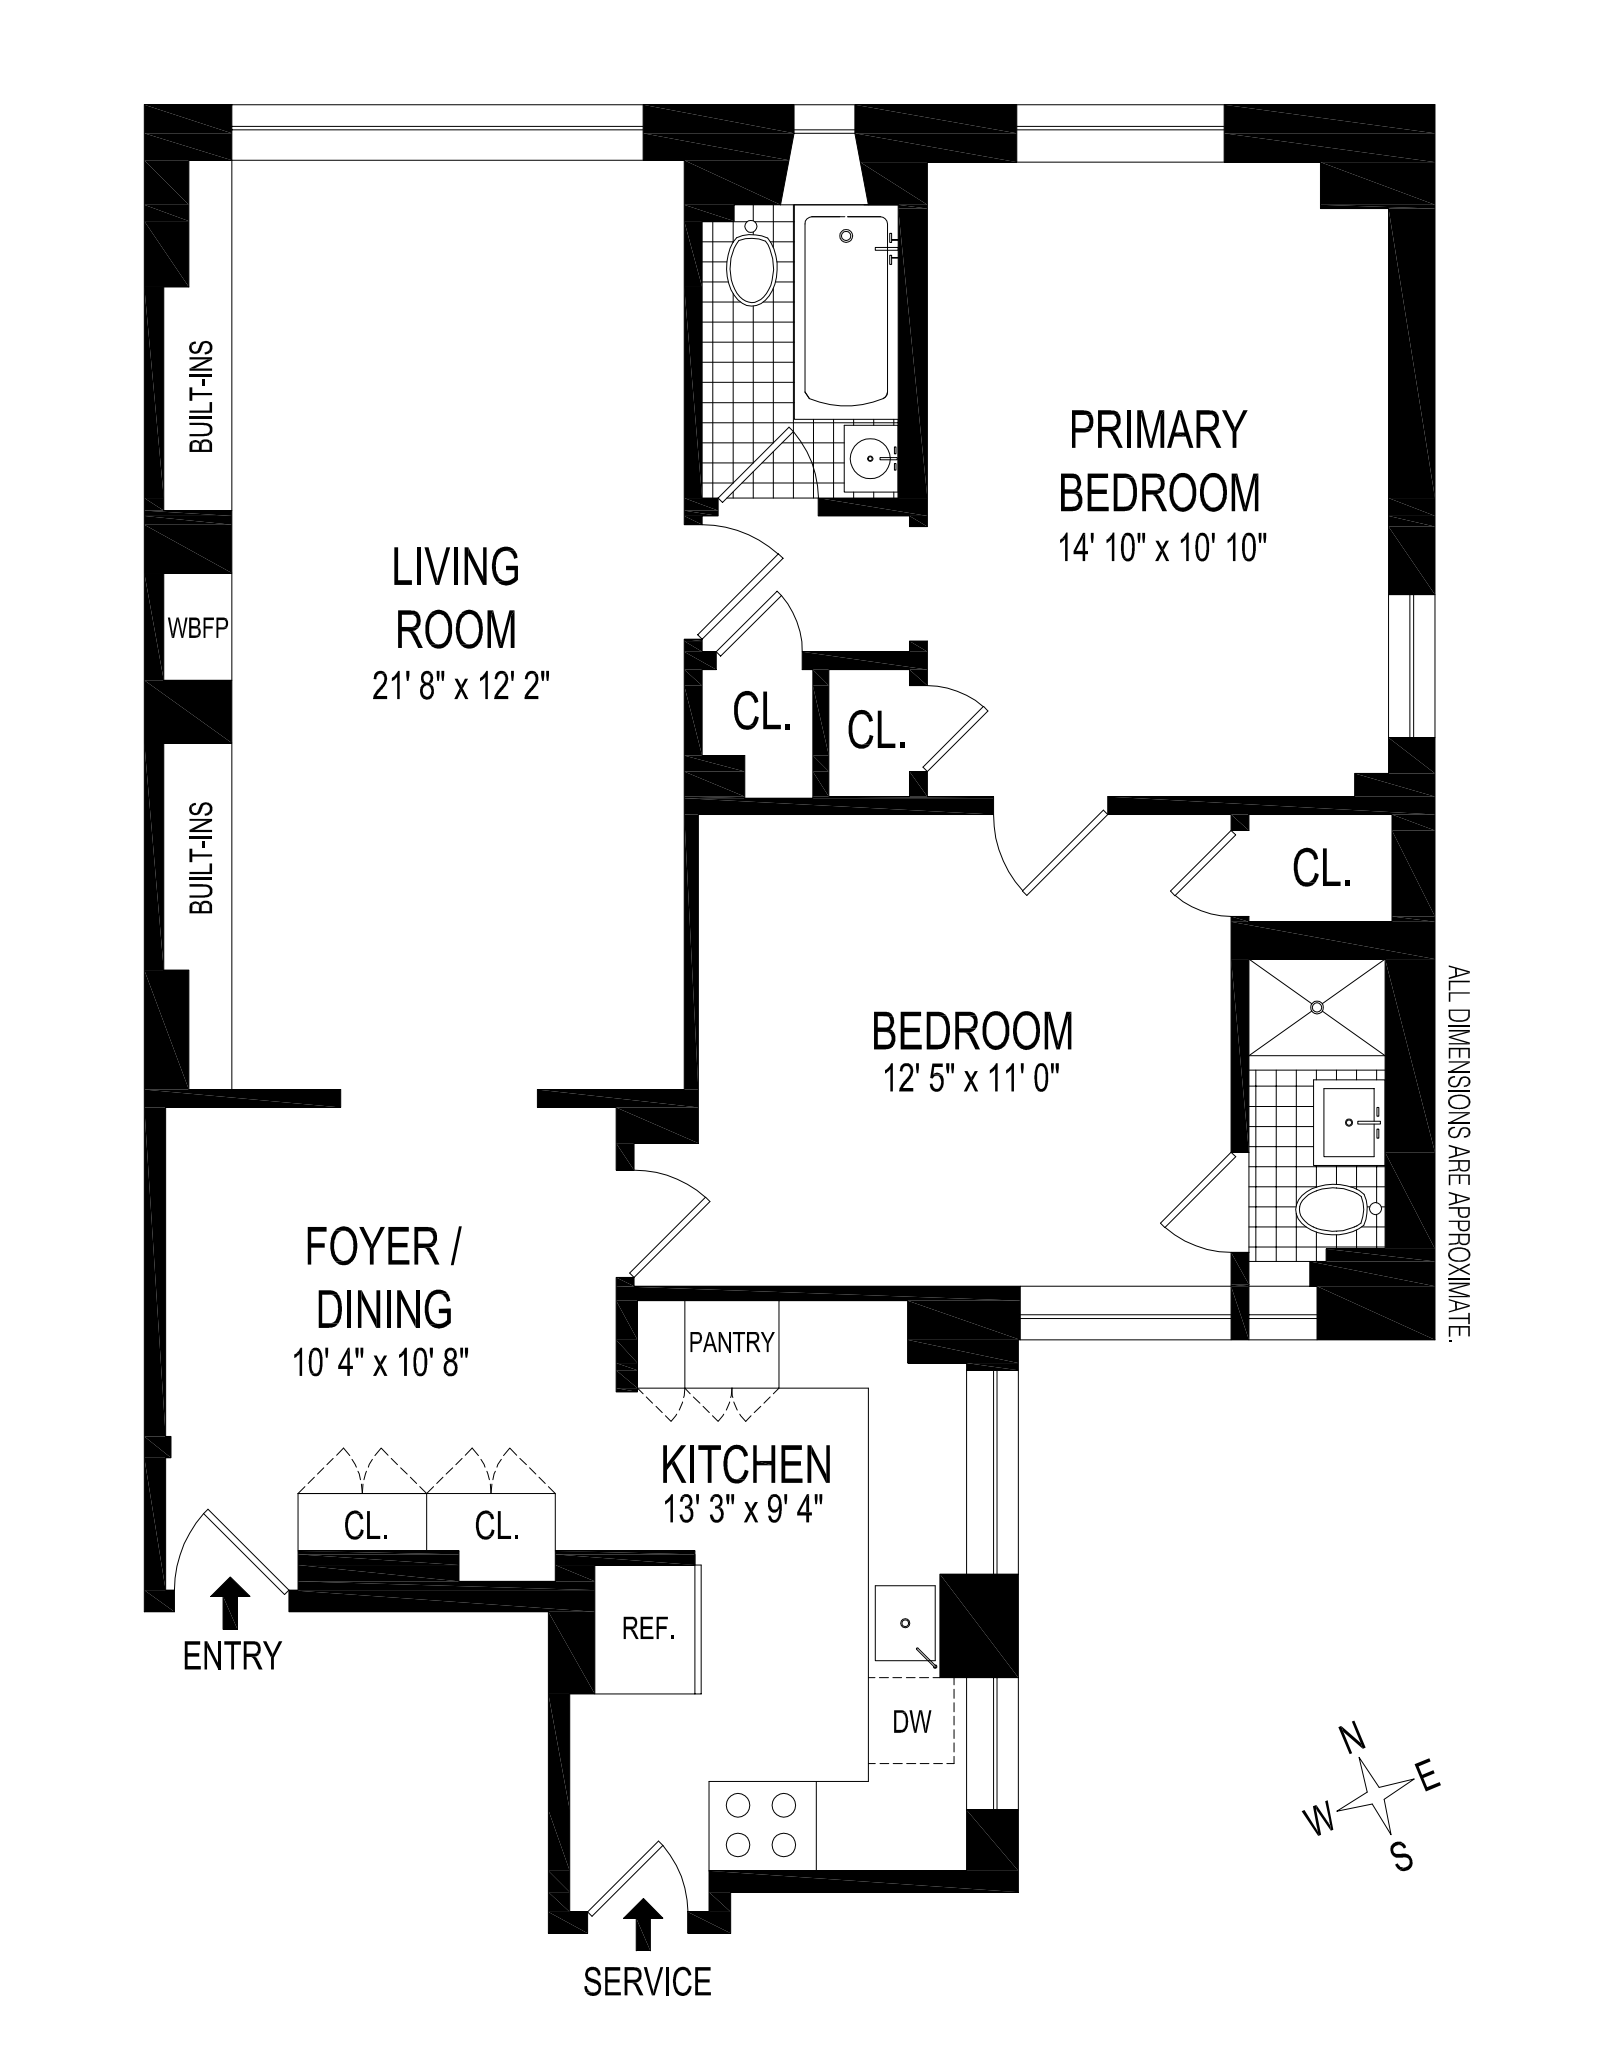 Floorplan for 166 East 96th Street, 6A